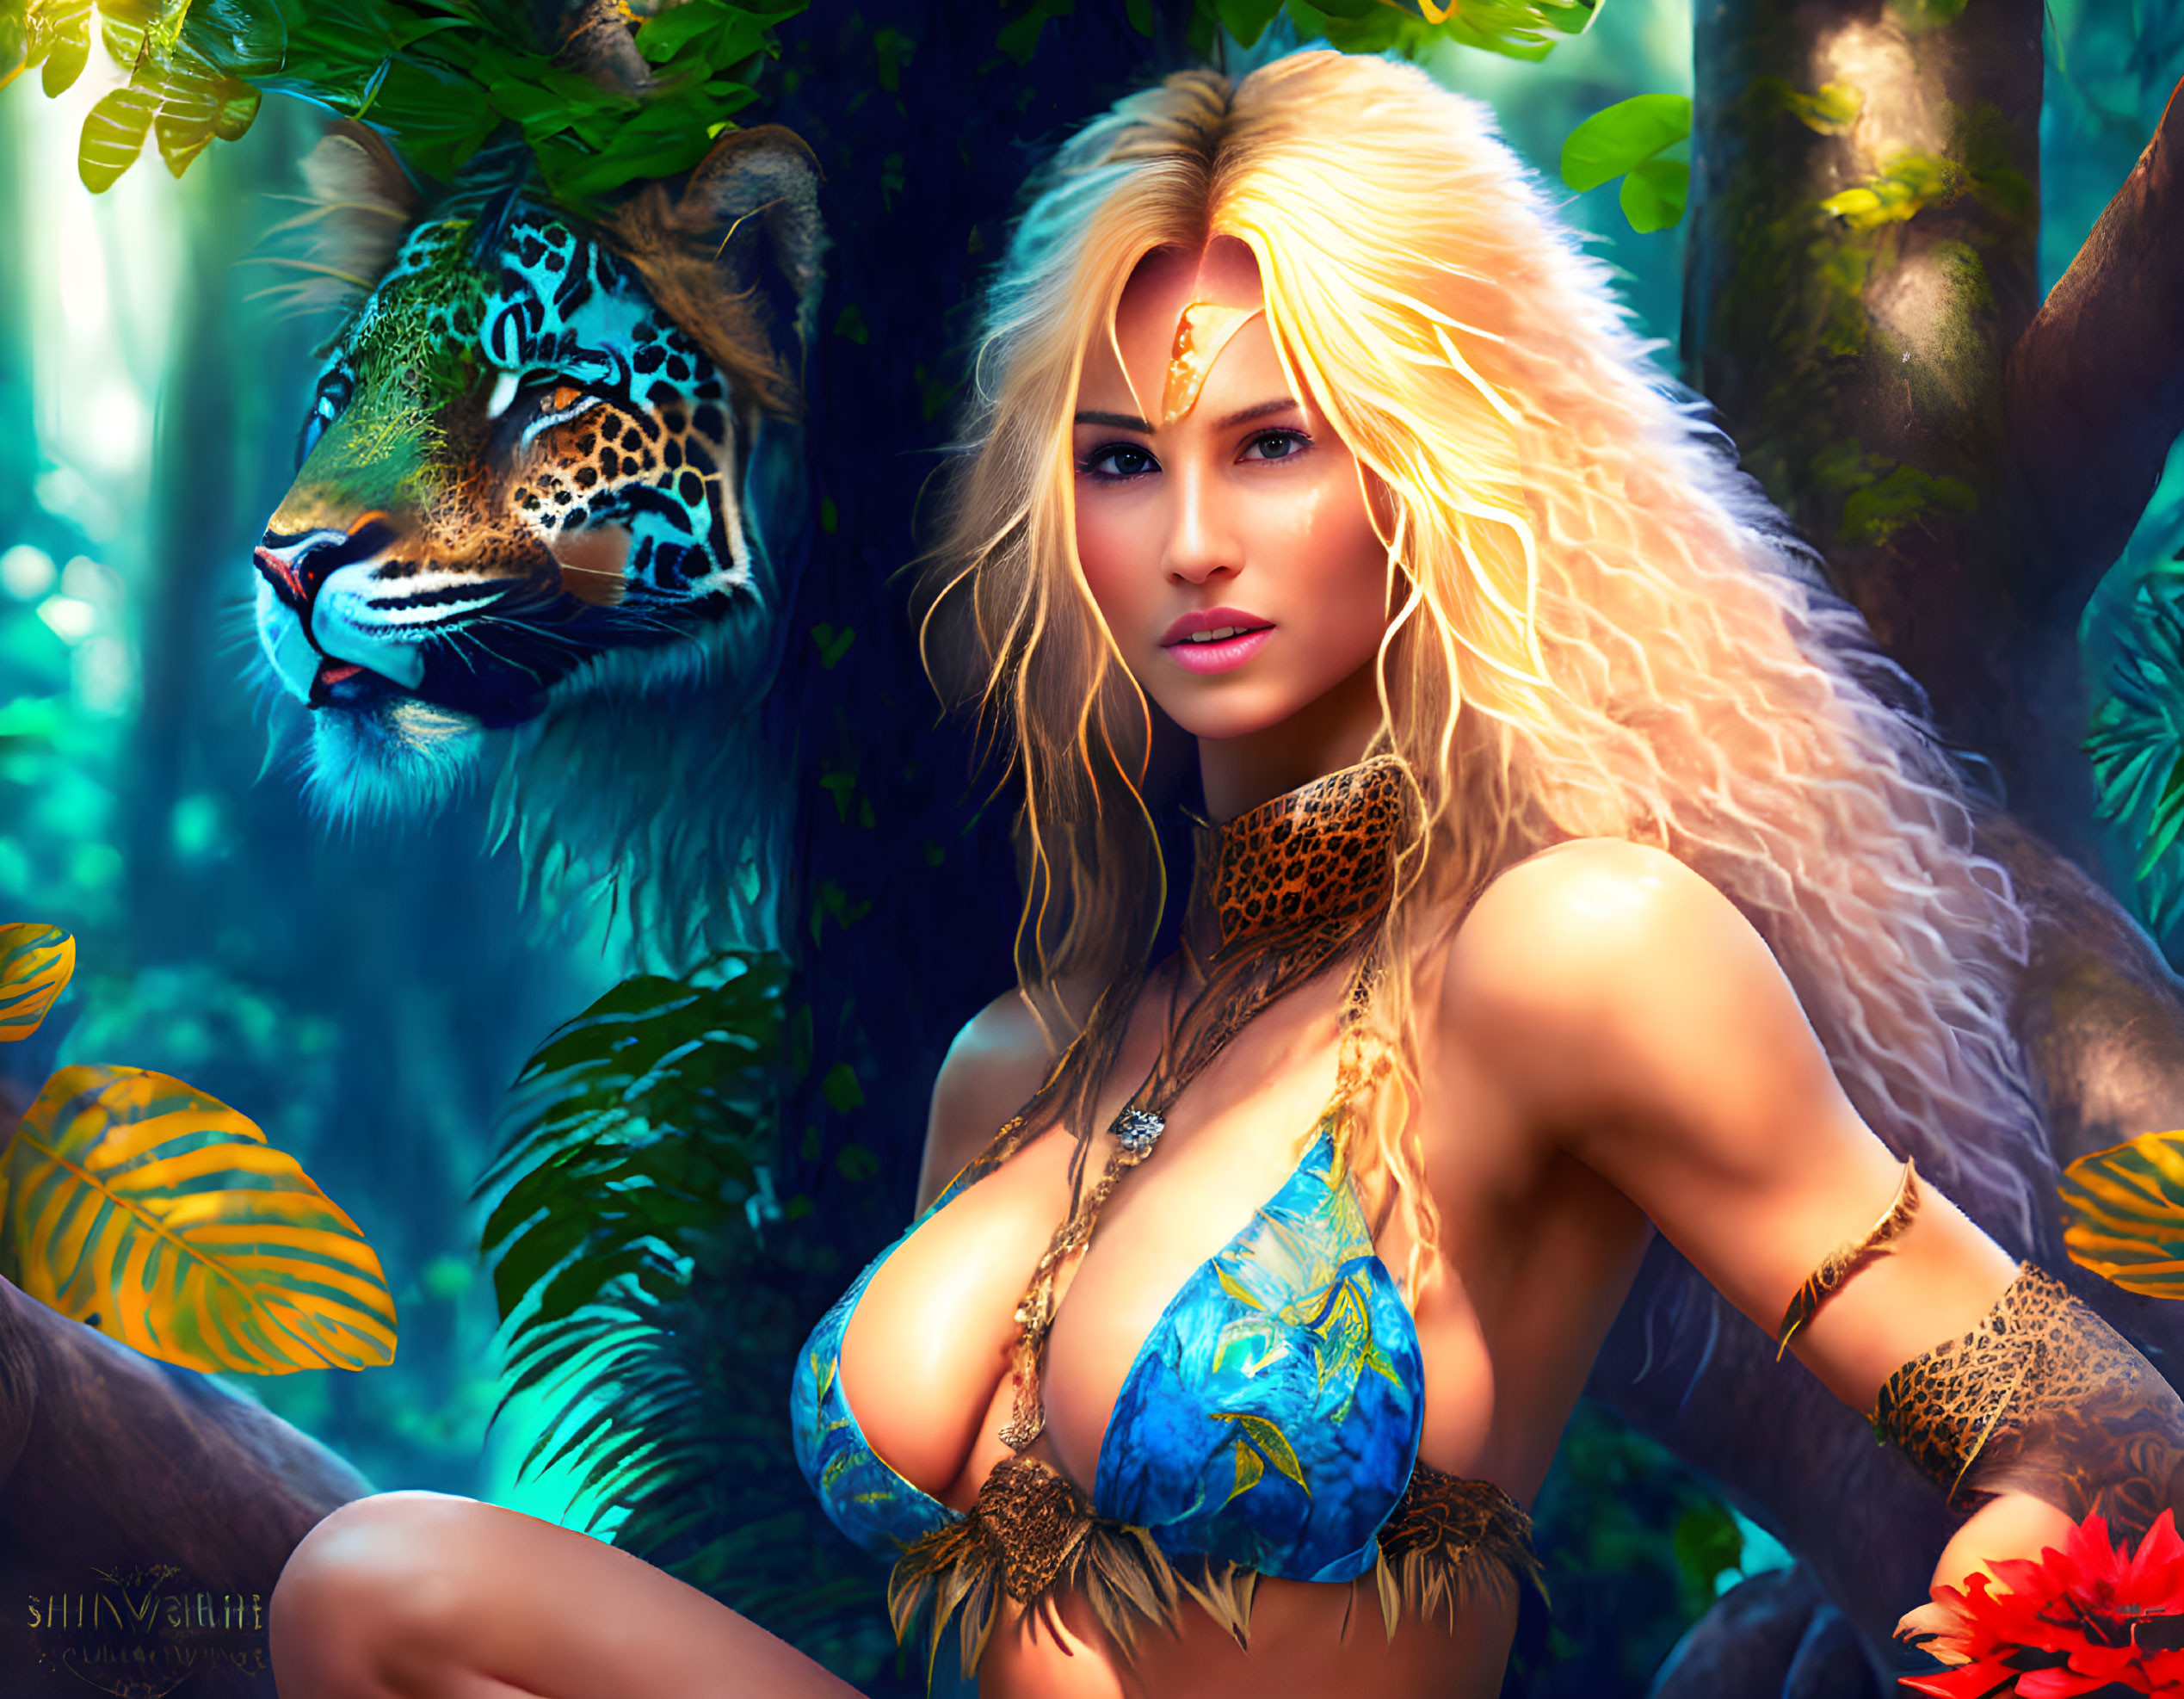 Sheena, Queen of the Jungle